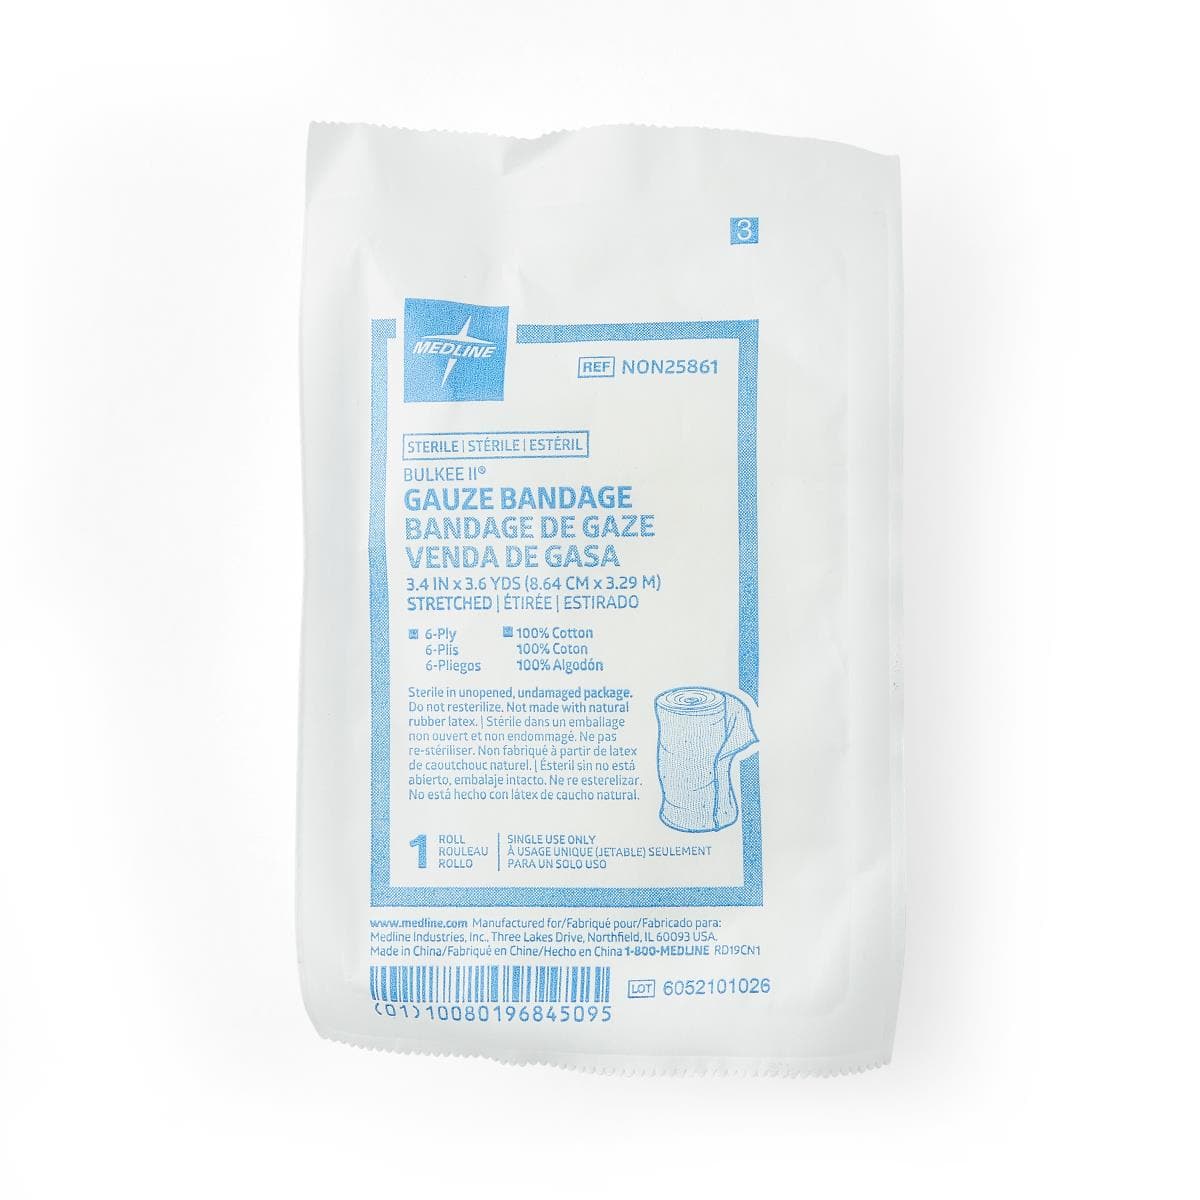 Medline Medline Bulkee II Sterile Cotton Gauze Bandages NON25861